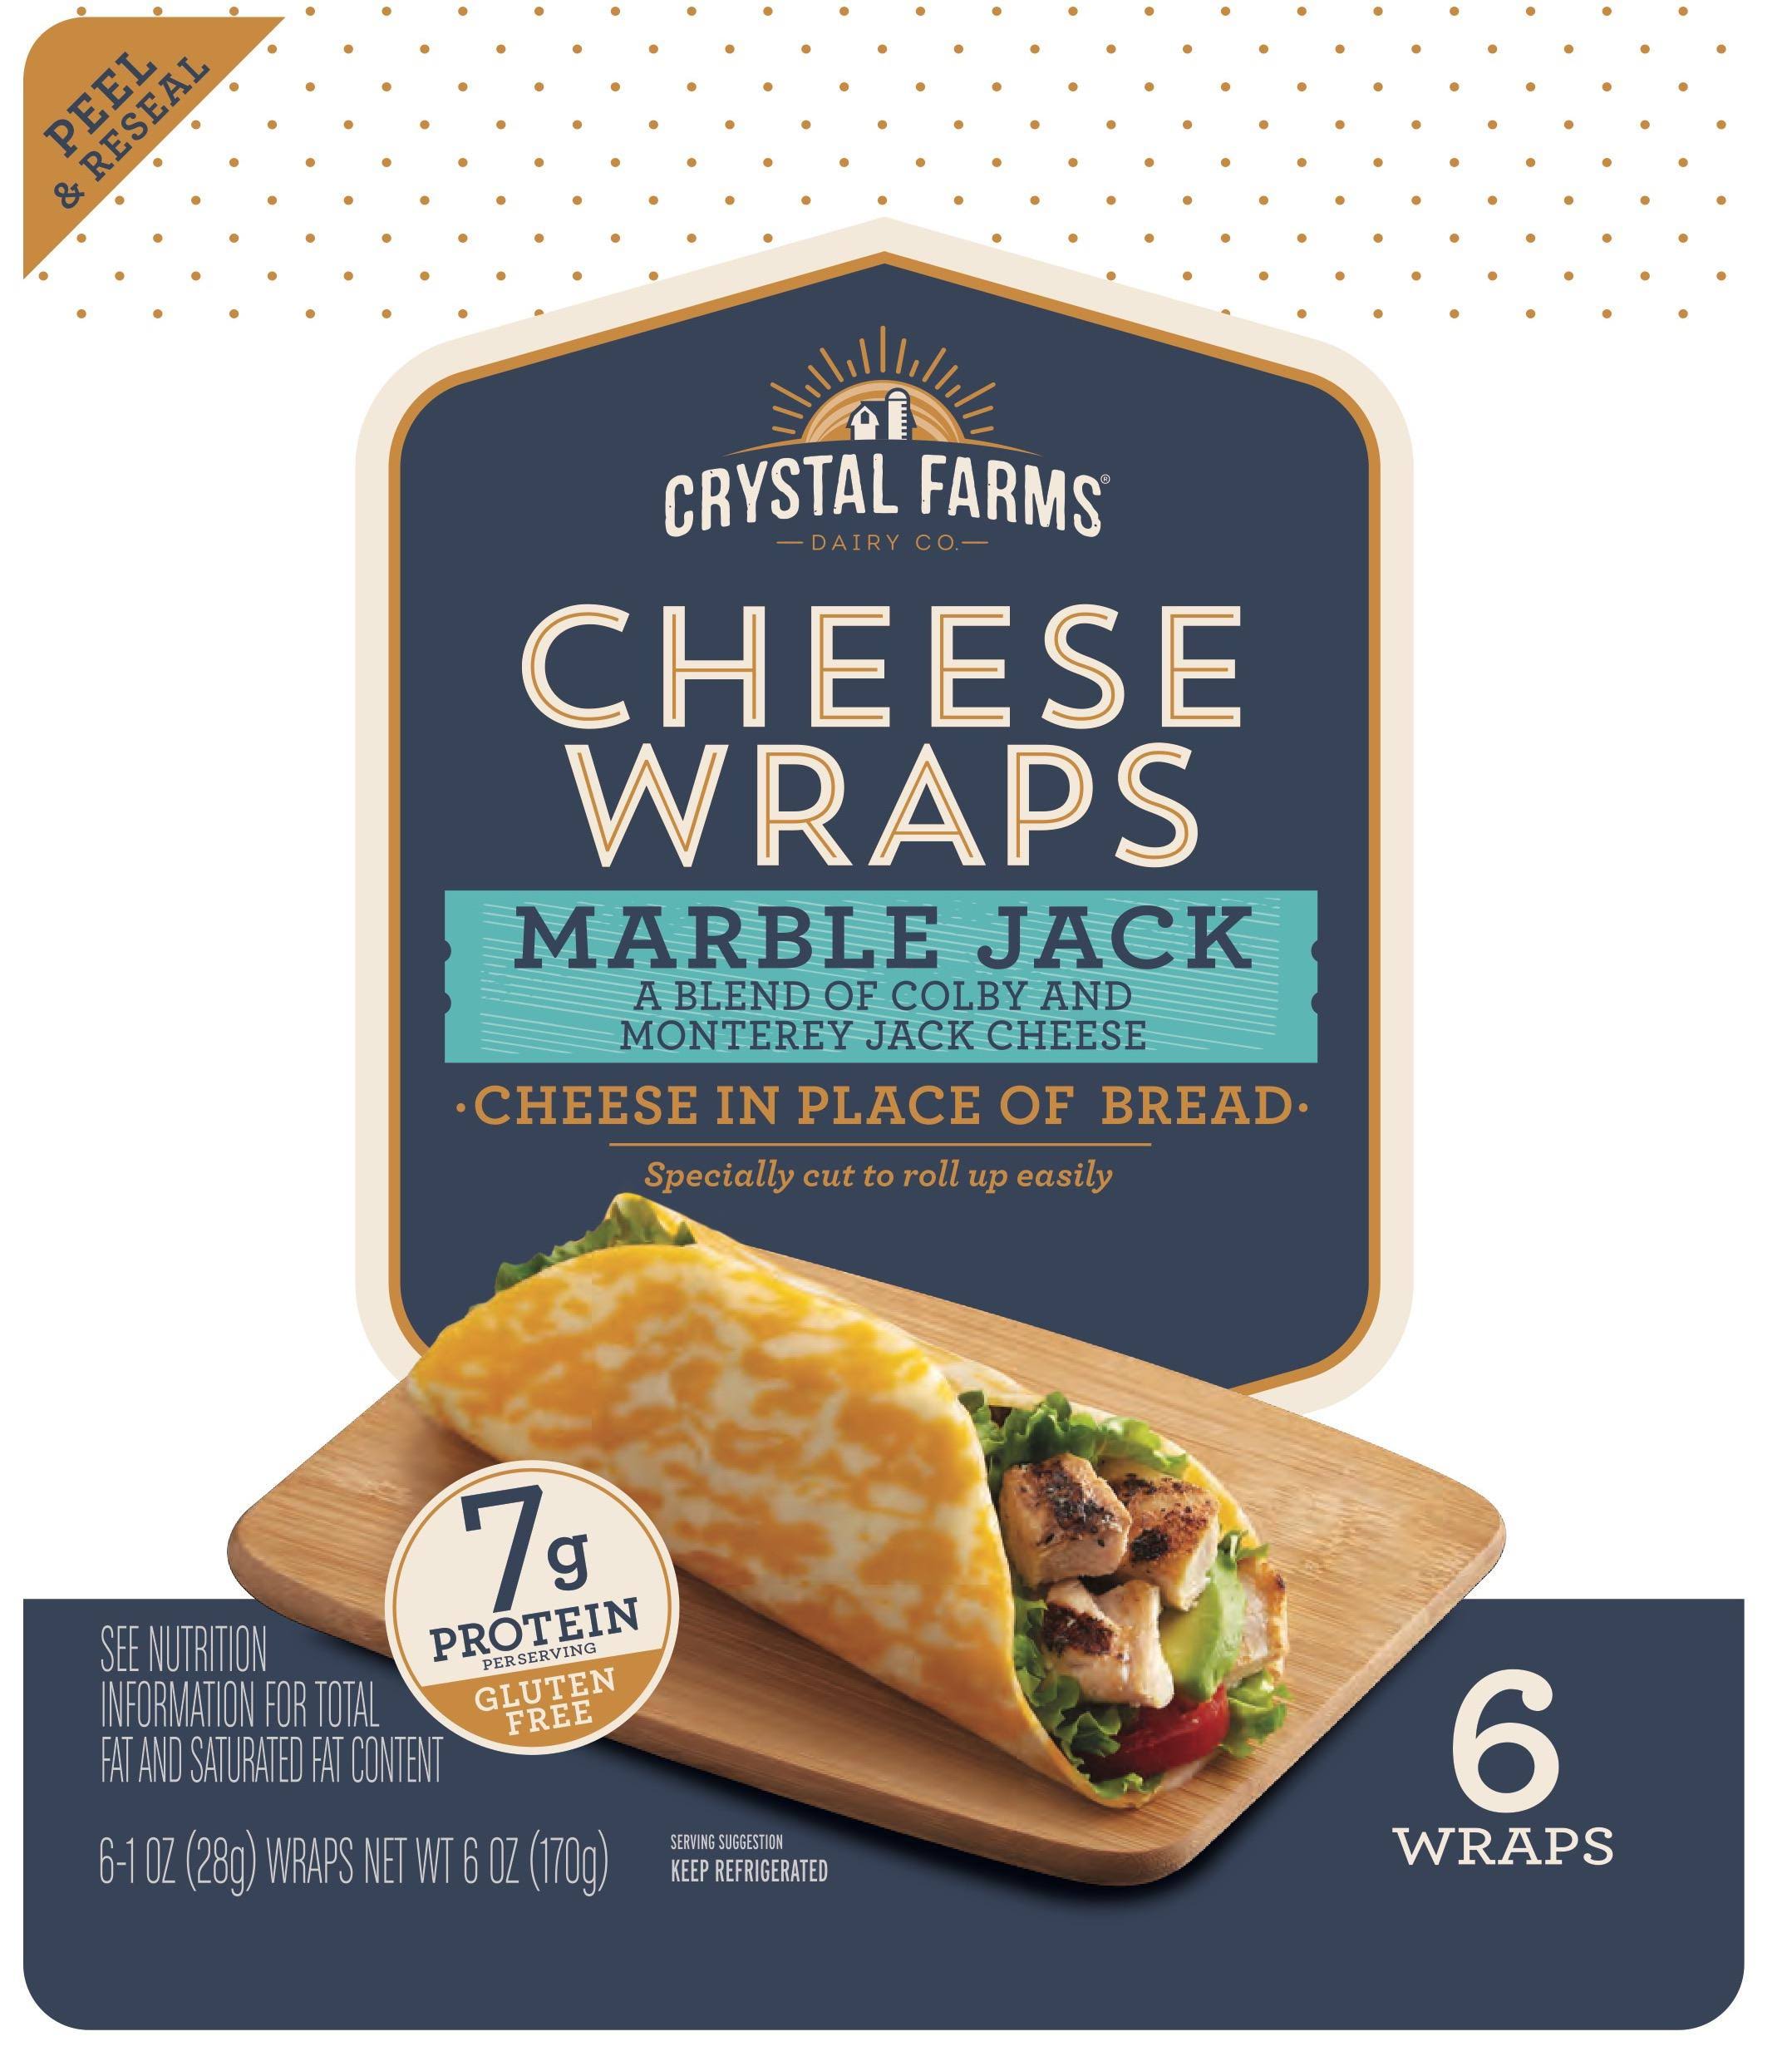 Crystal Farms Cheese Wraps, Marble Jack - 6 pack, 1 oz wraps